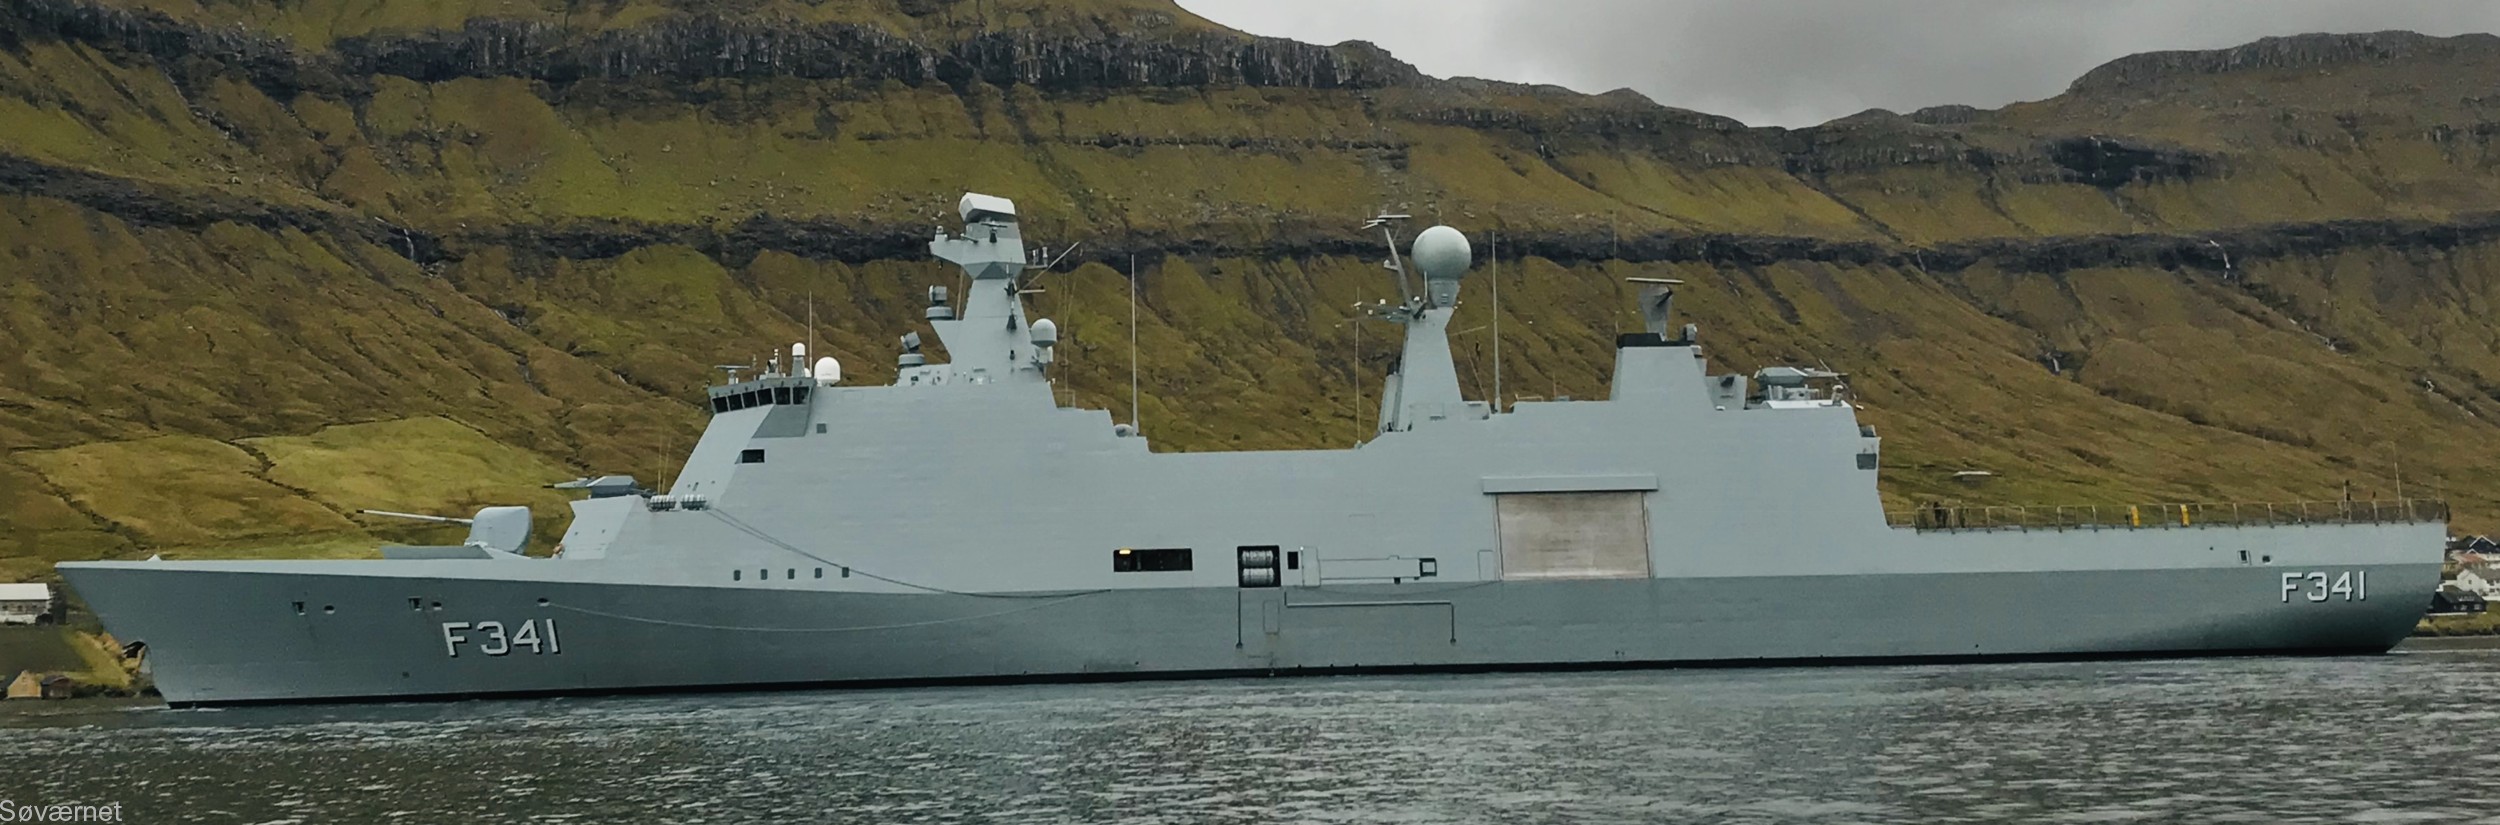 f-341 hdms absalon frigate royal danish navy 06